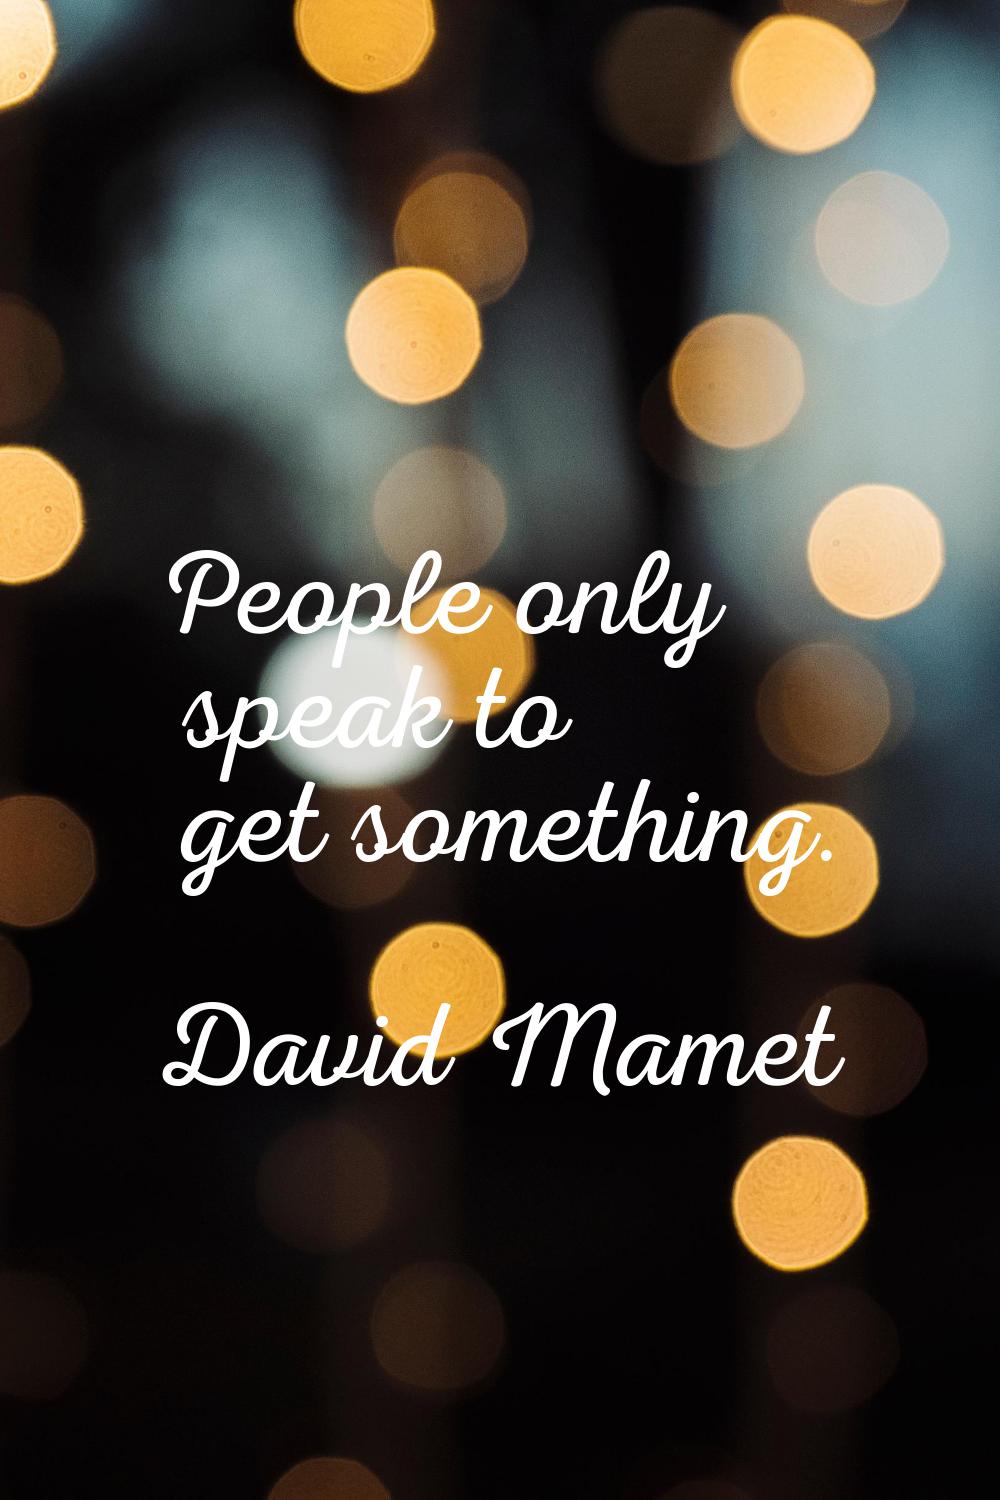 People only speak to get something.